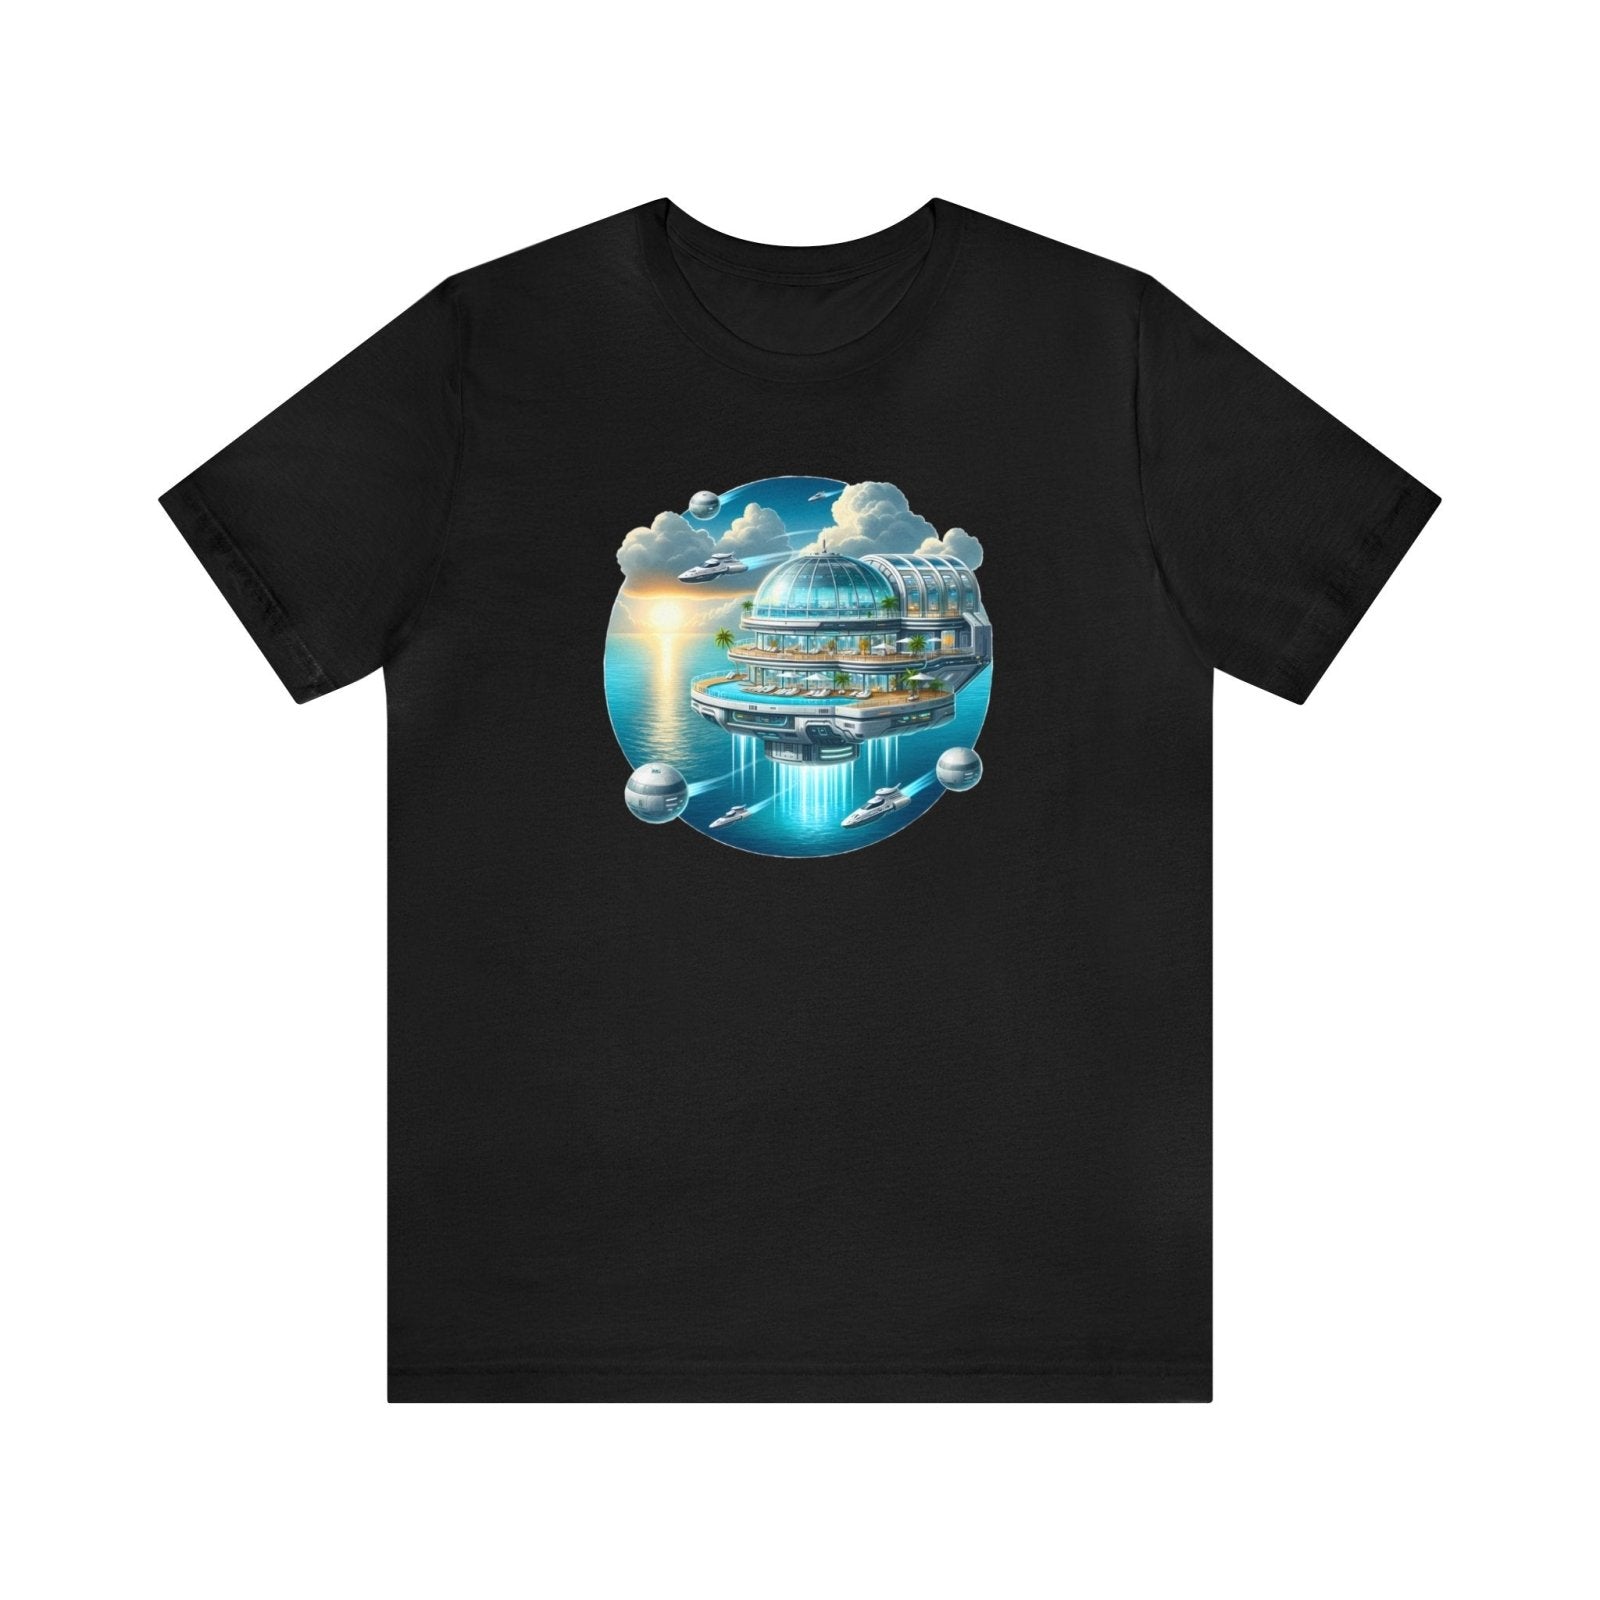 Skyward Cruise Unisex Short Sleeve Tee, nerd shirt, geek fashion, flying ship, Black - Subtle Blue M